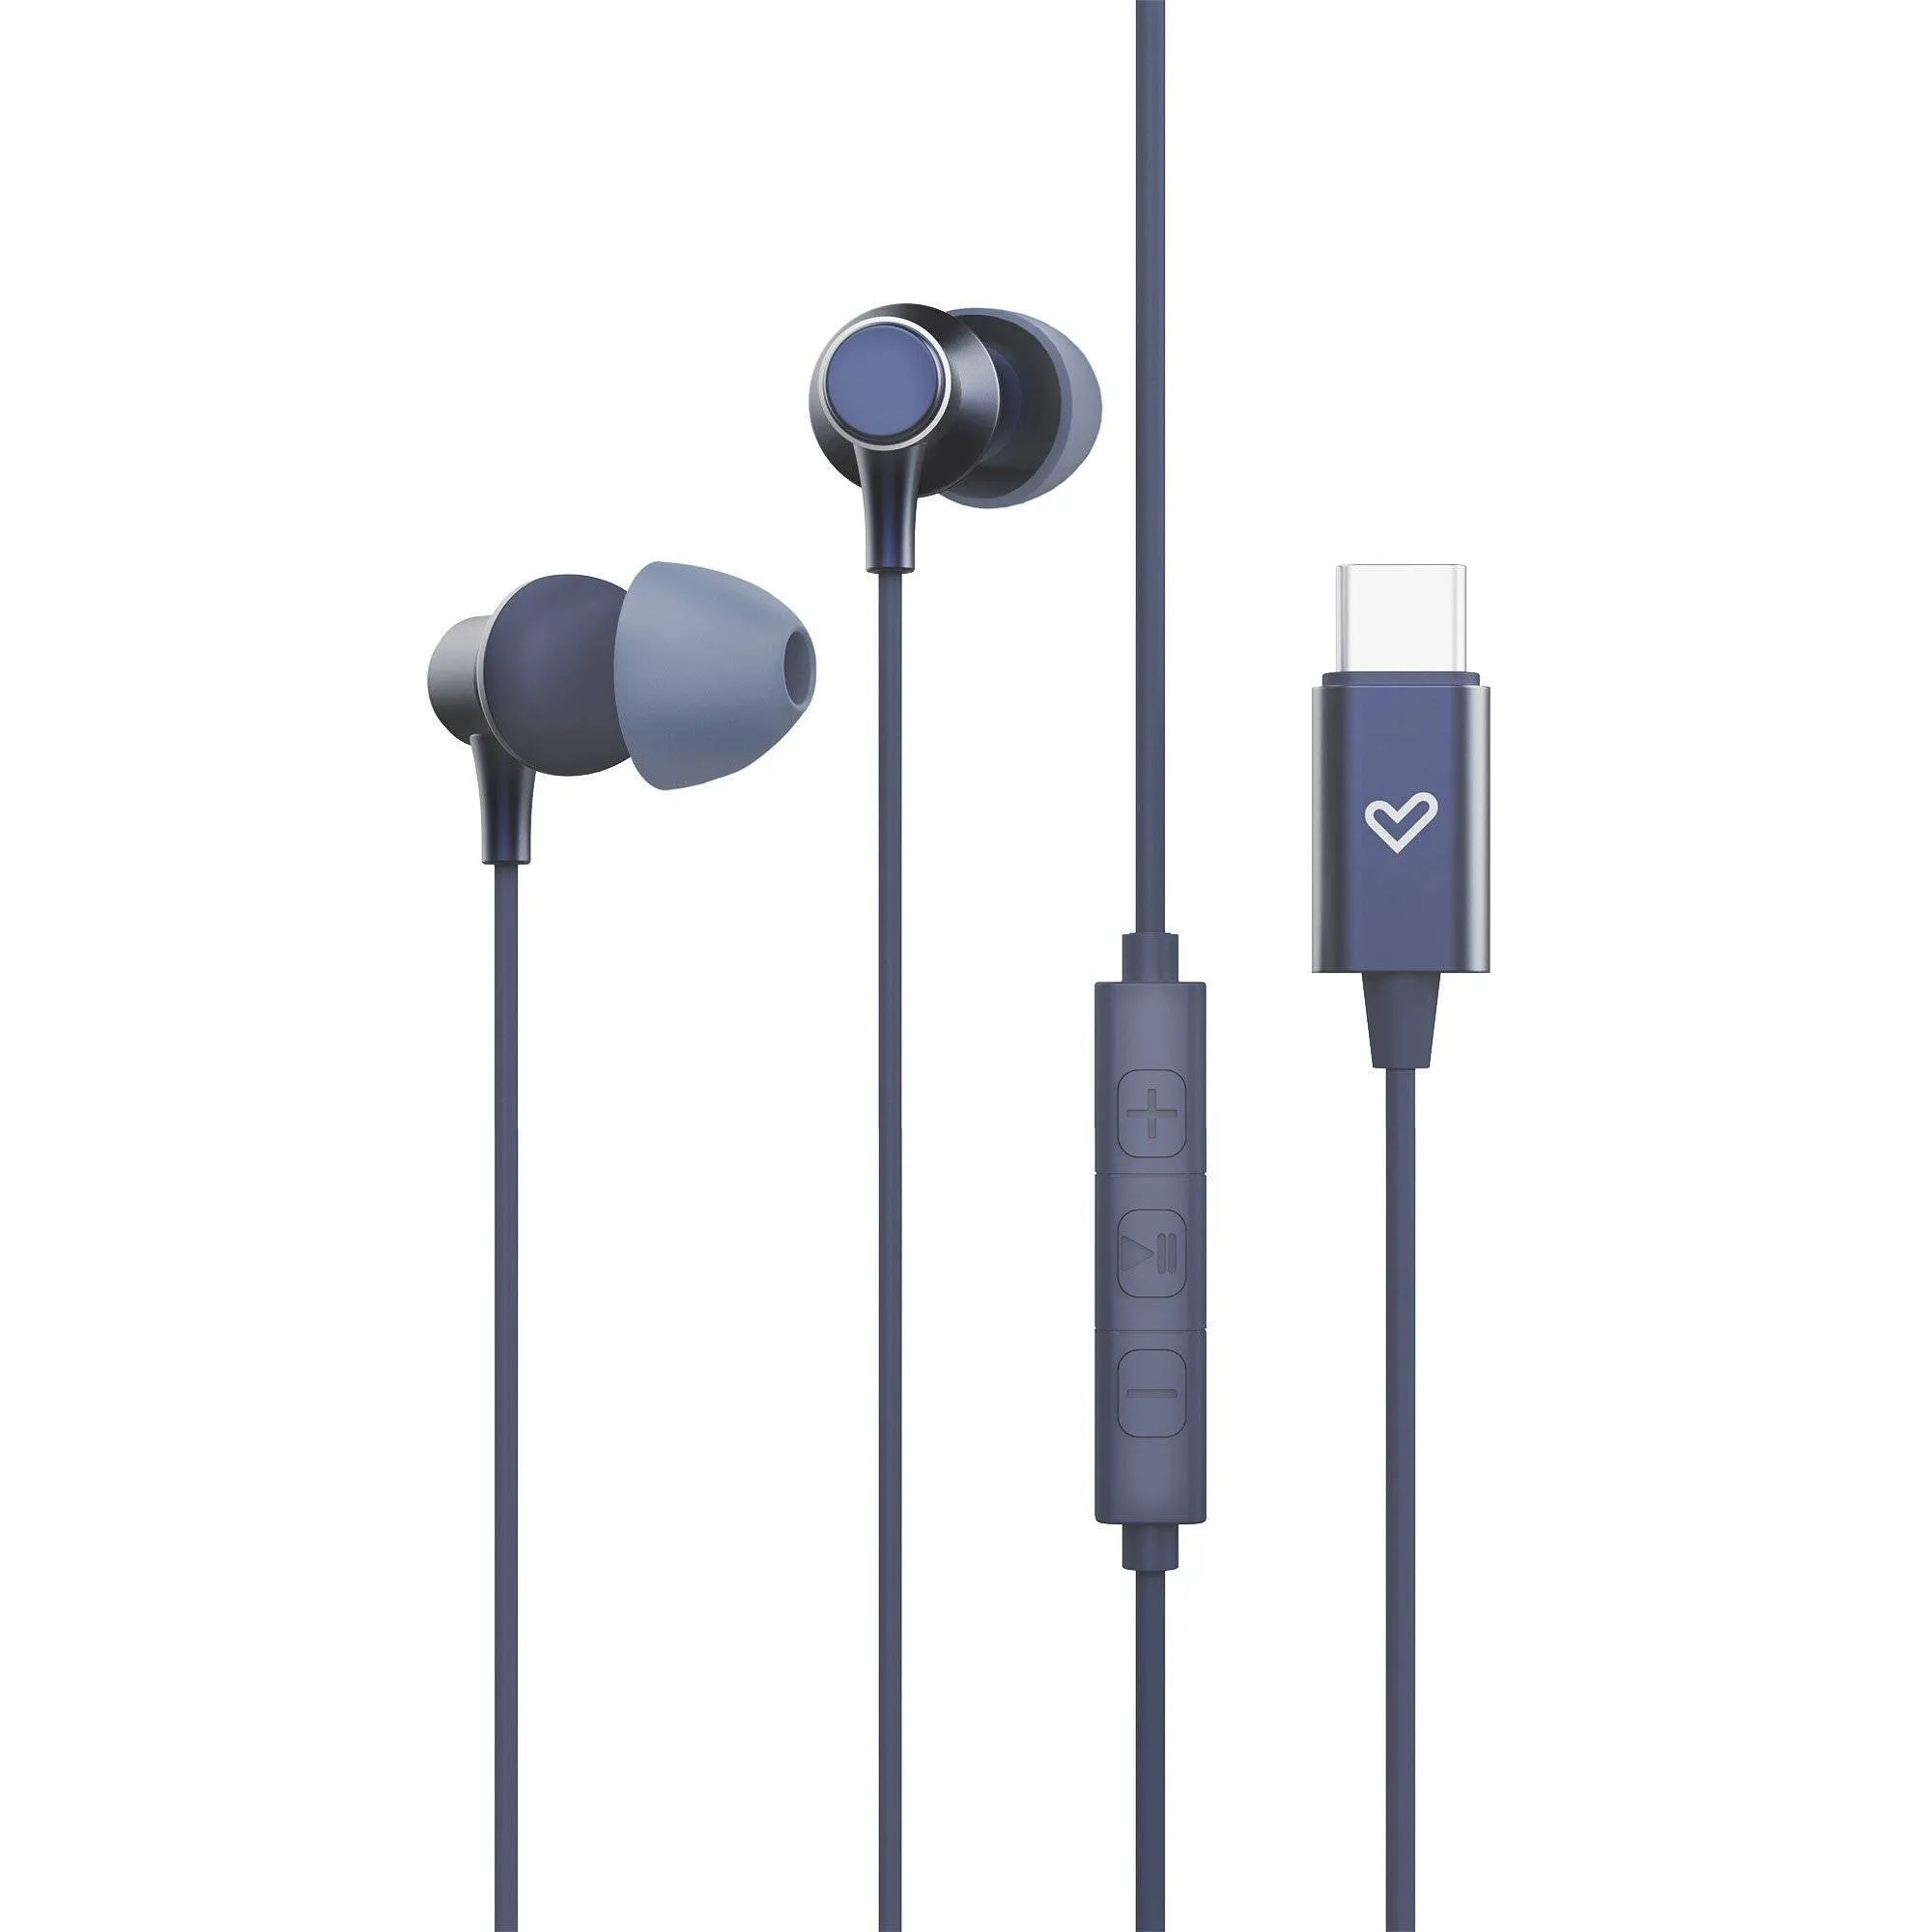 Metallized Type C - Wired earphones